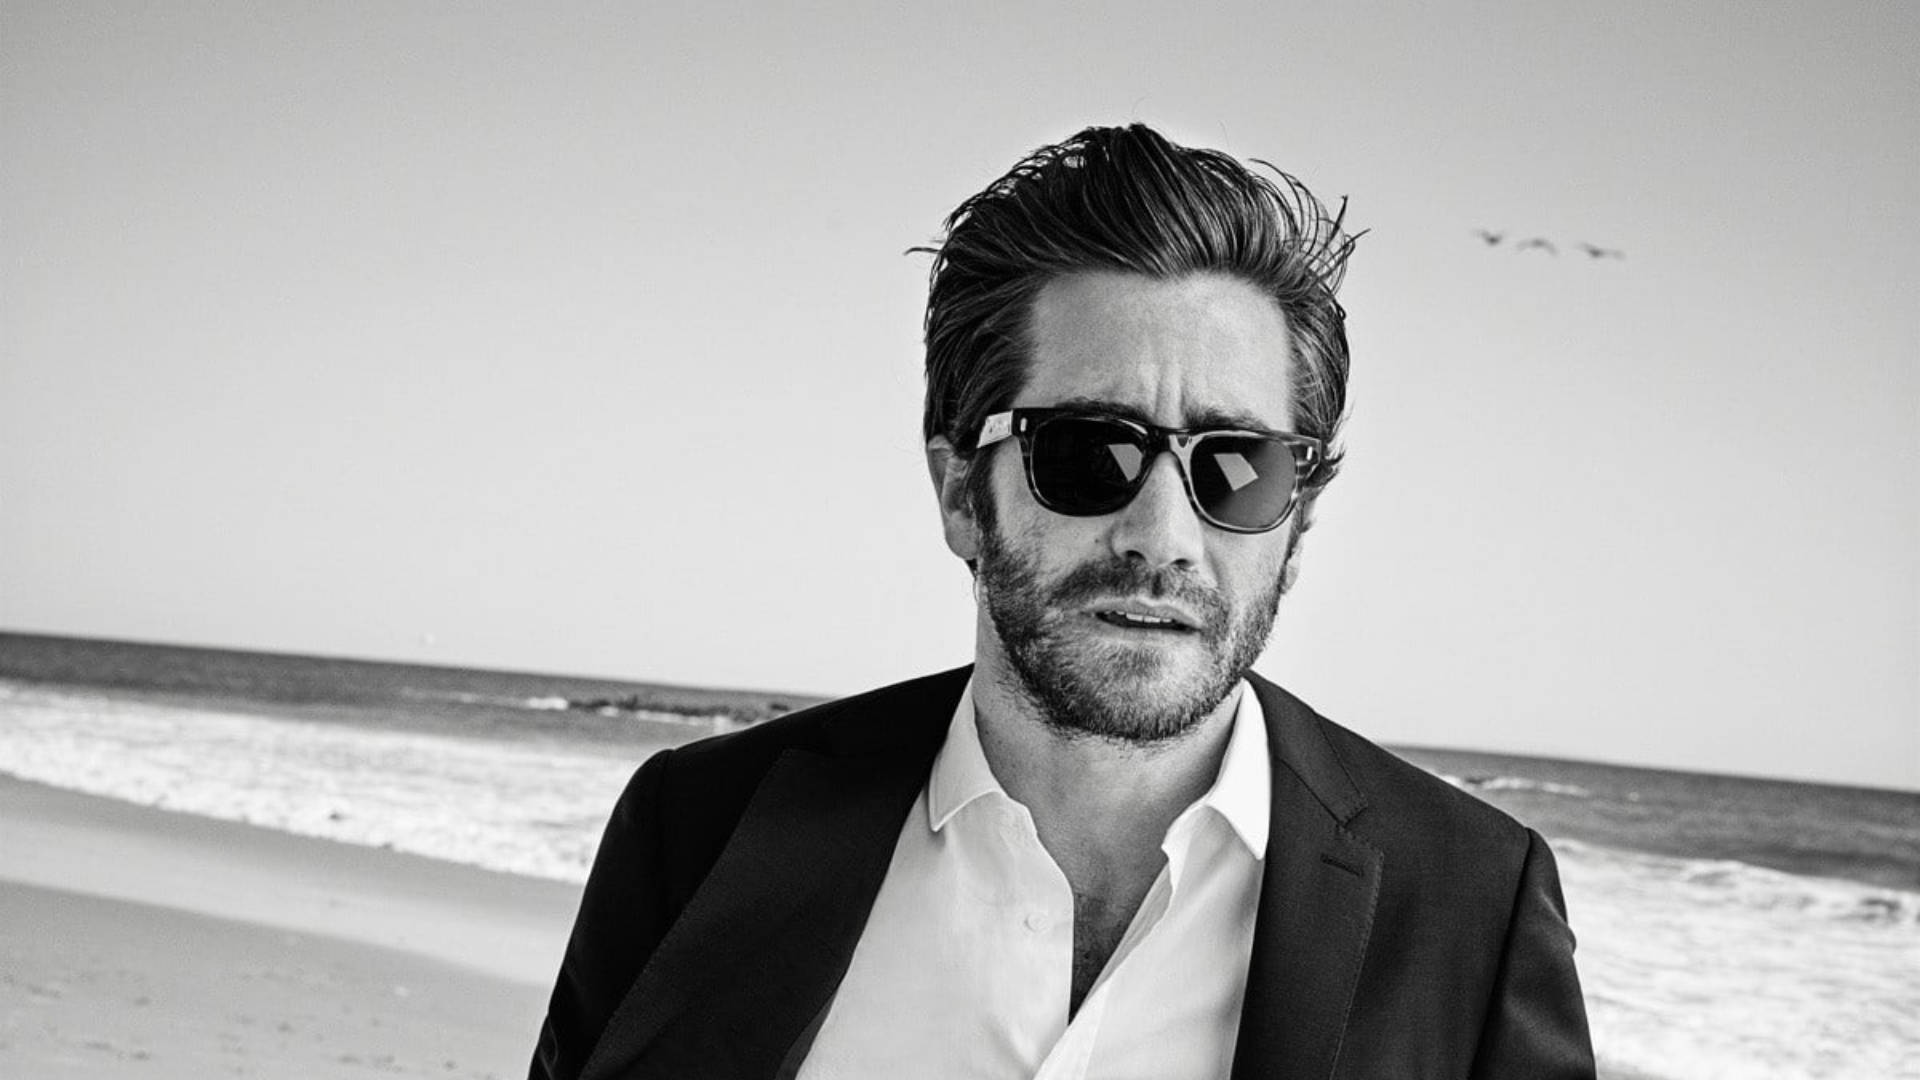 Jake Gyllenhaal With Sunglasses Background